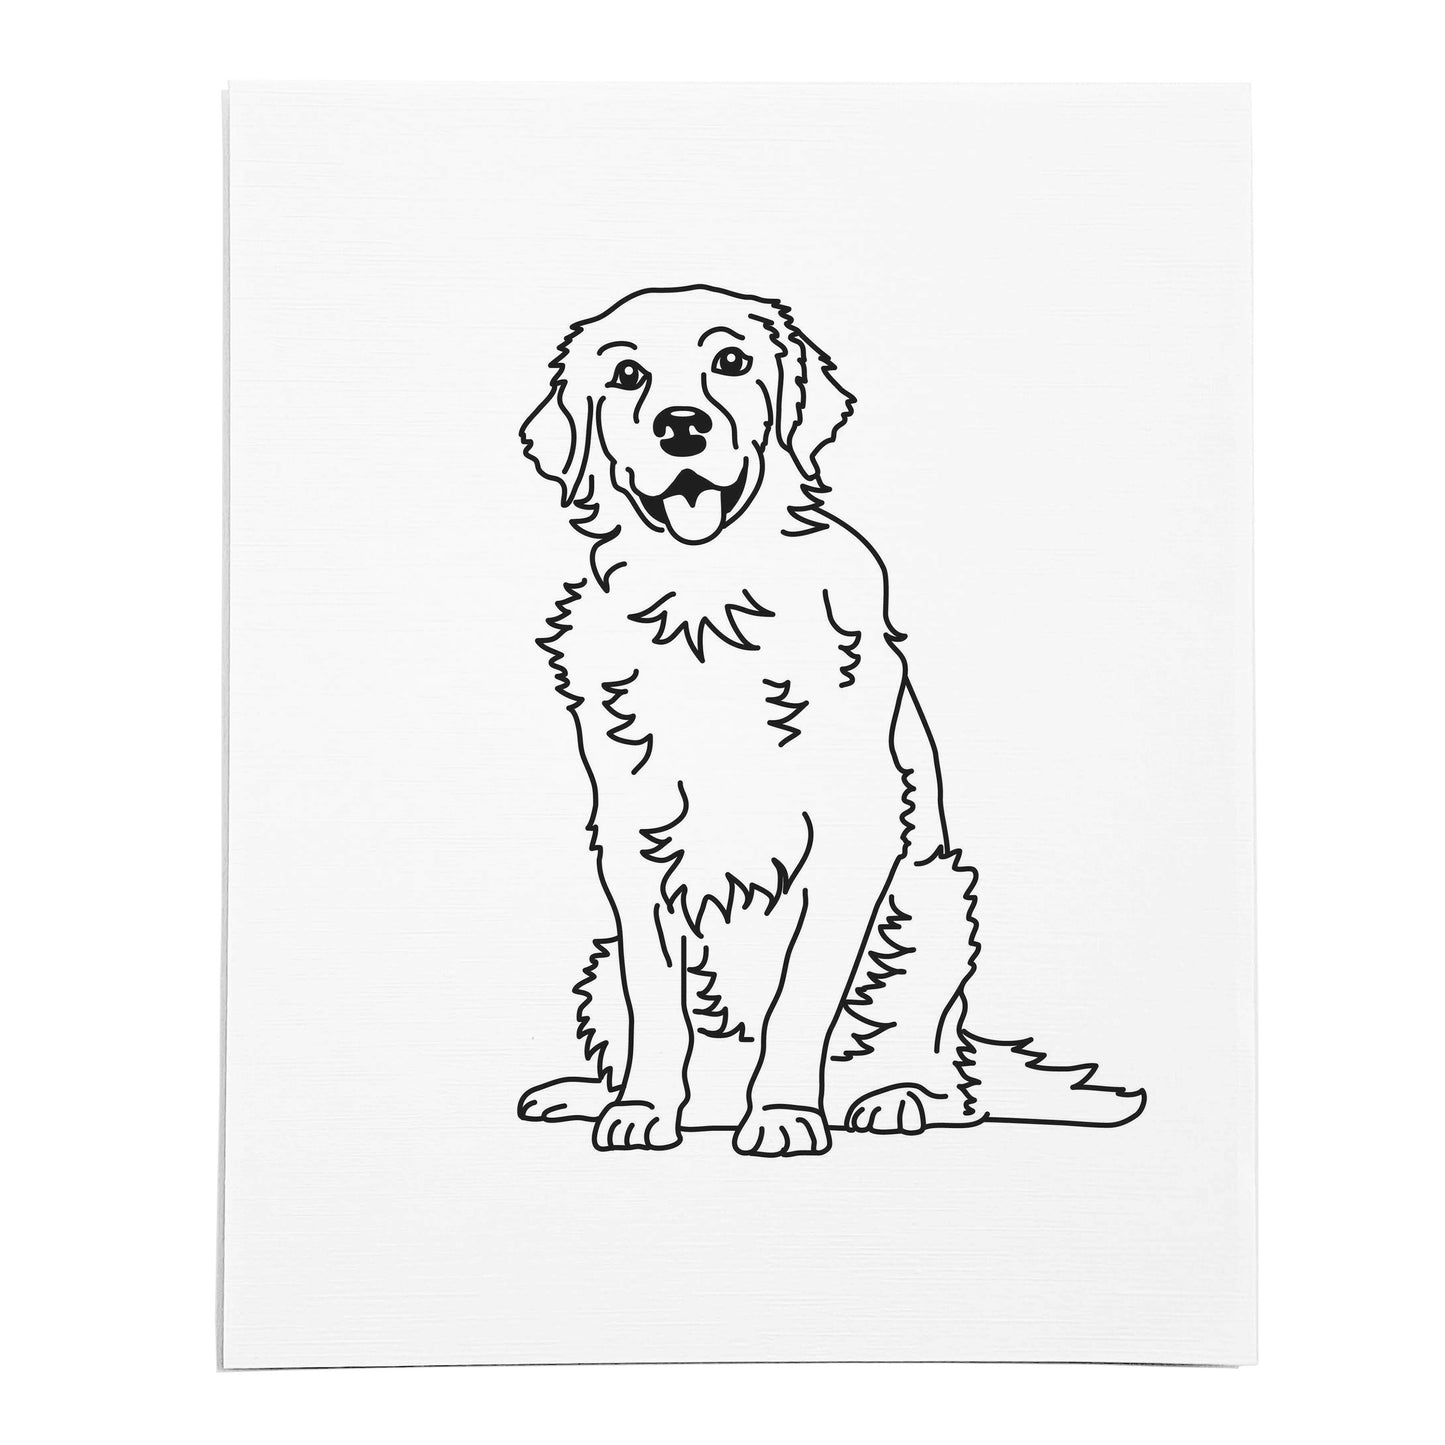 An art print featuring a line drawing of a Golden Retriever dog on white linen paper